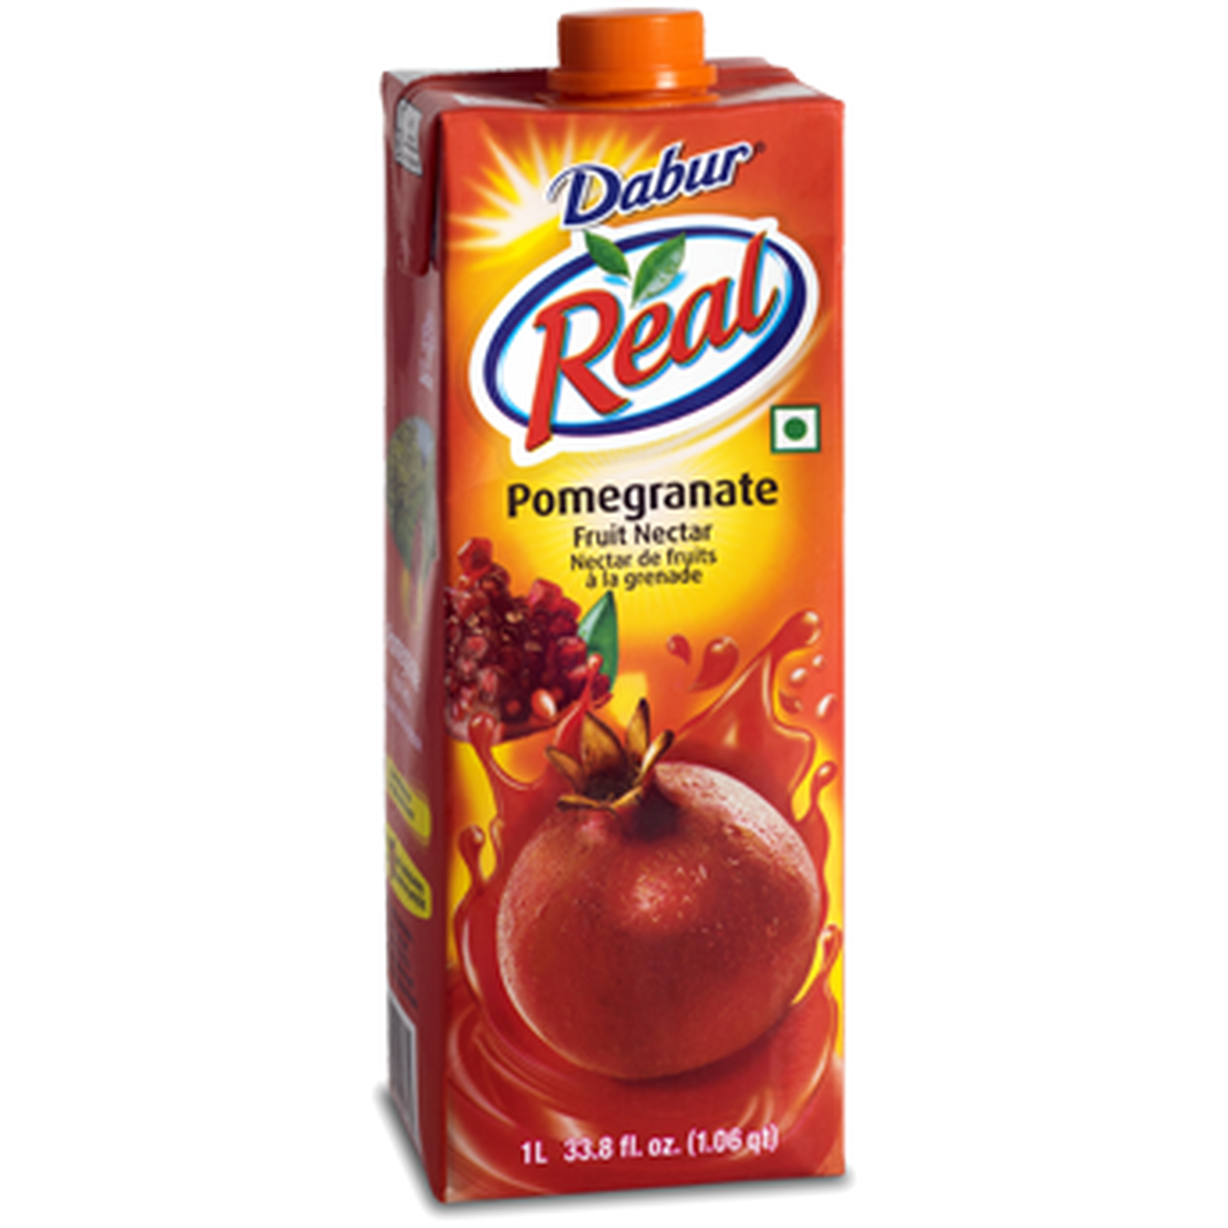 Case of 12 - Dabur Real Pomegranate Fruit Nectar Juice - 1 L (33.8 Fl Oz)